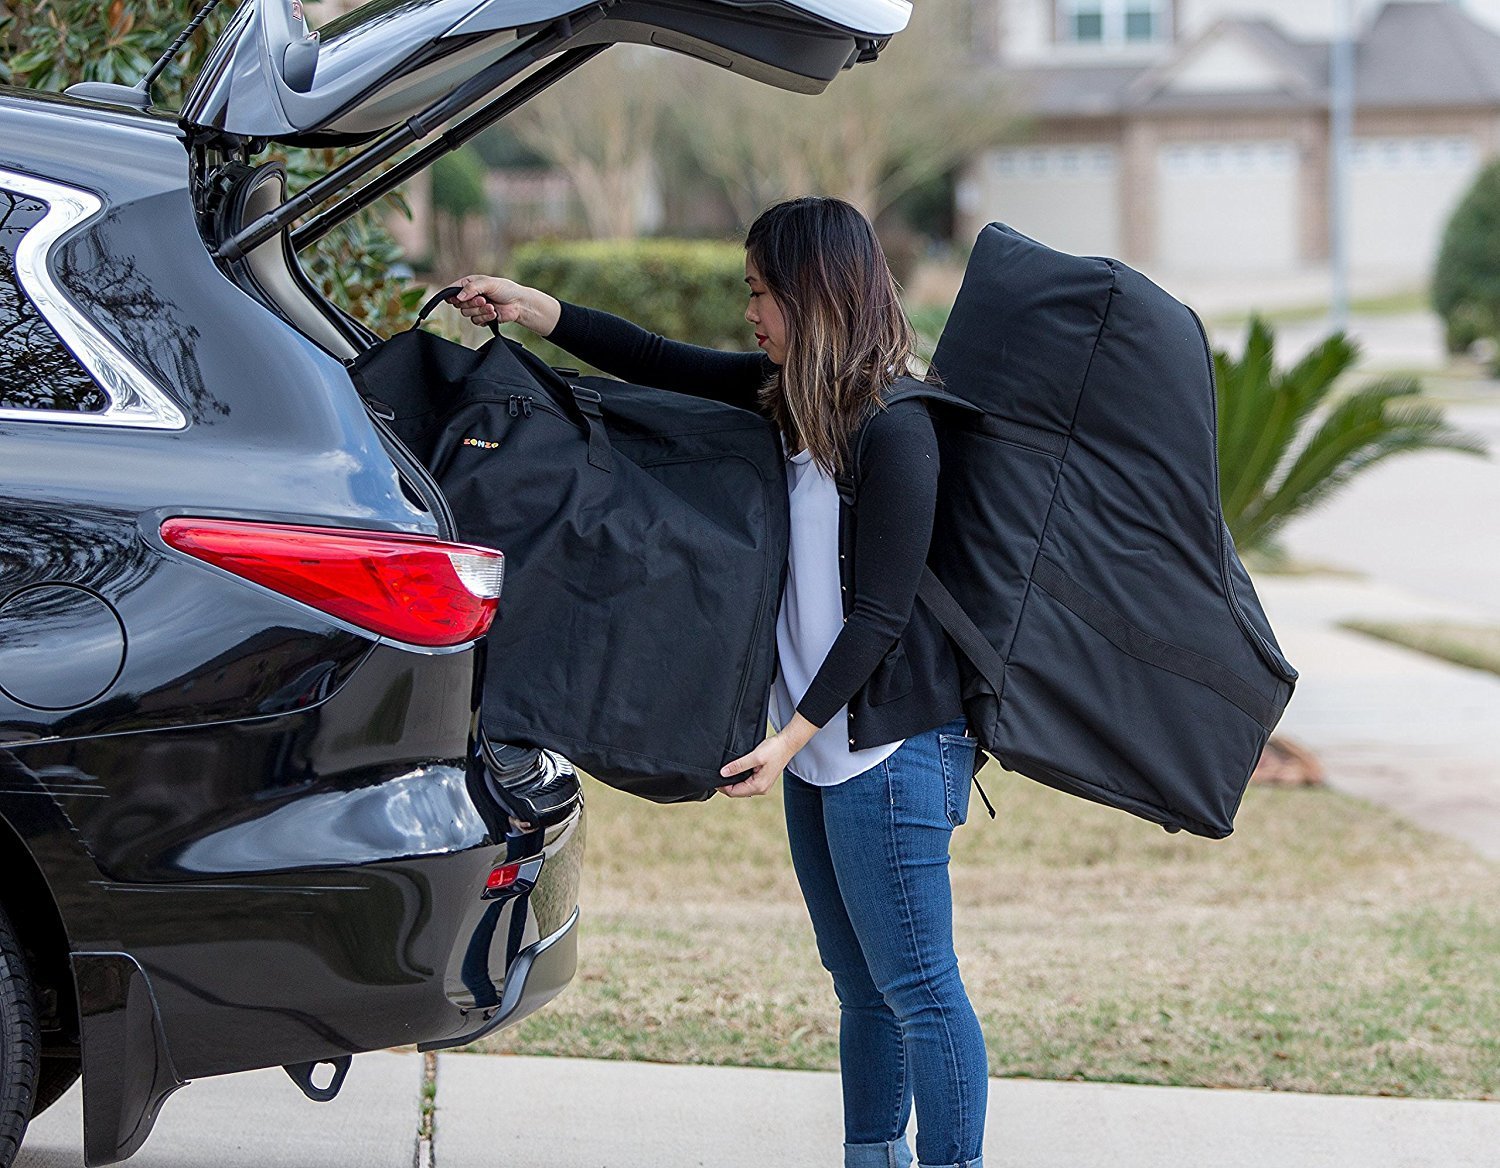 Zohzo Car Seat Travel Bag Black - Adjustable Padded Backpack, Size 1, Free Shipping & Returns